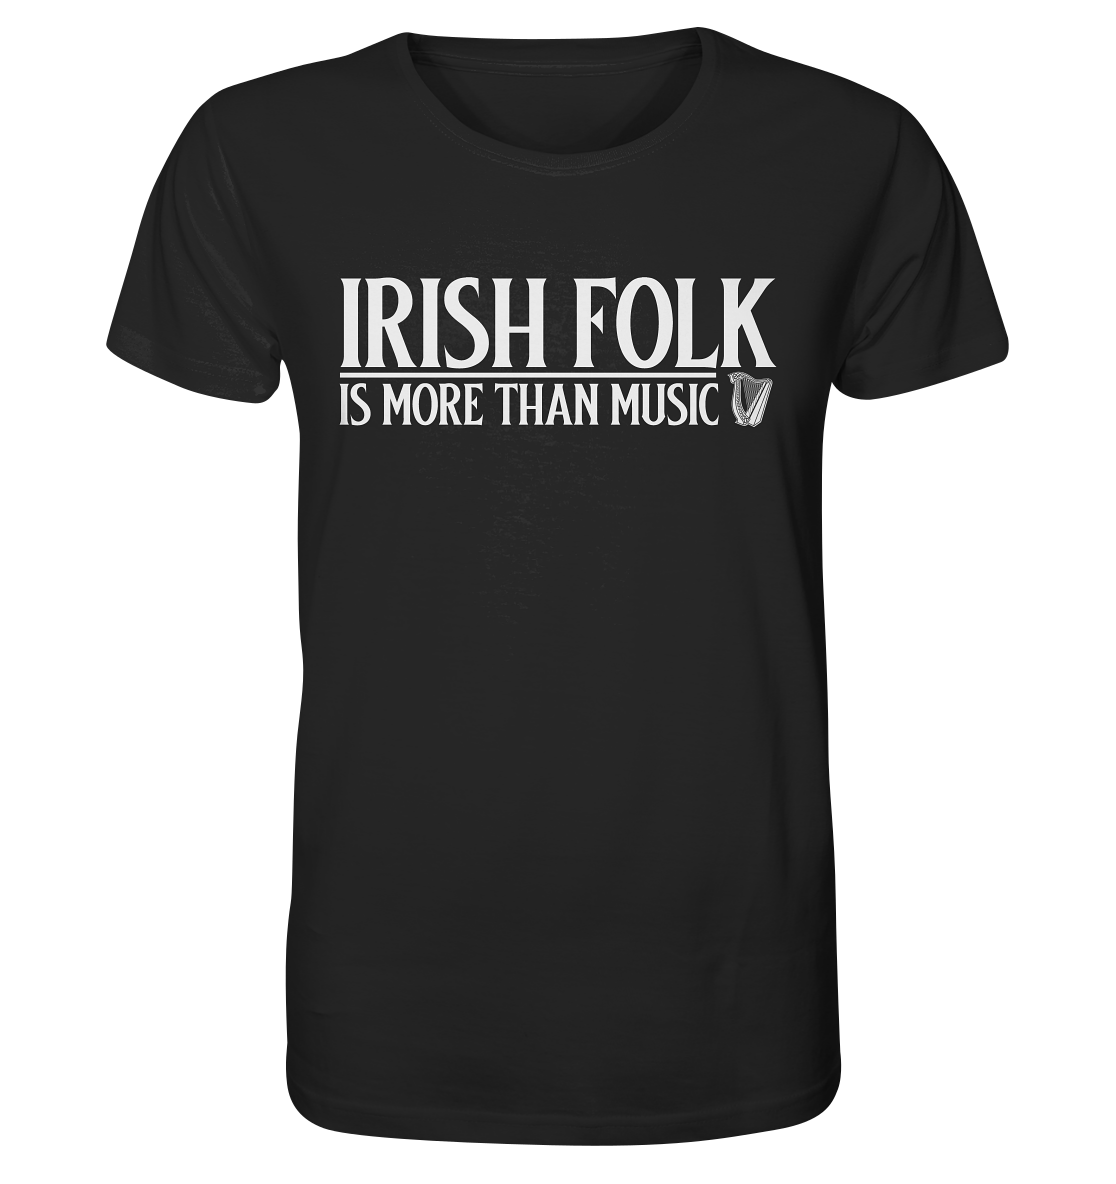 Irish Folk "Is More Than Music" - Organic Shirt